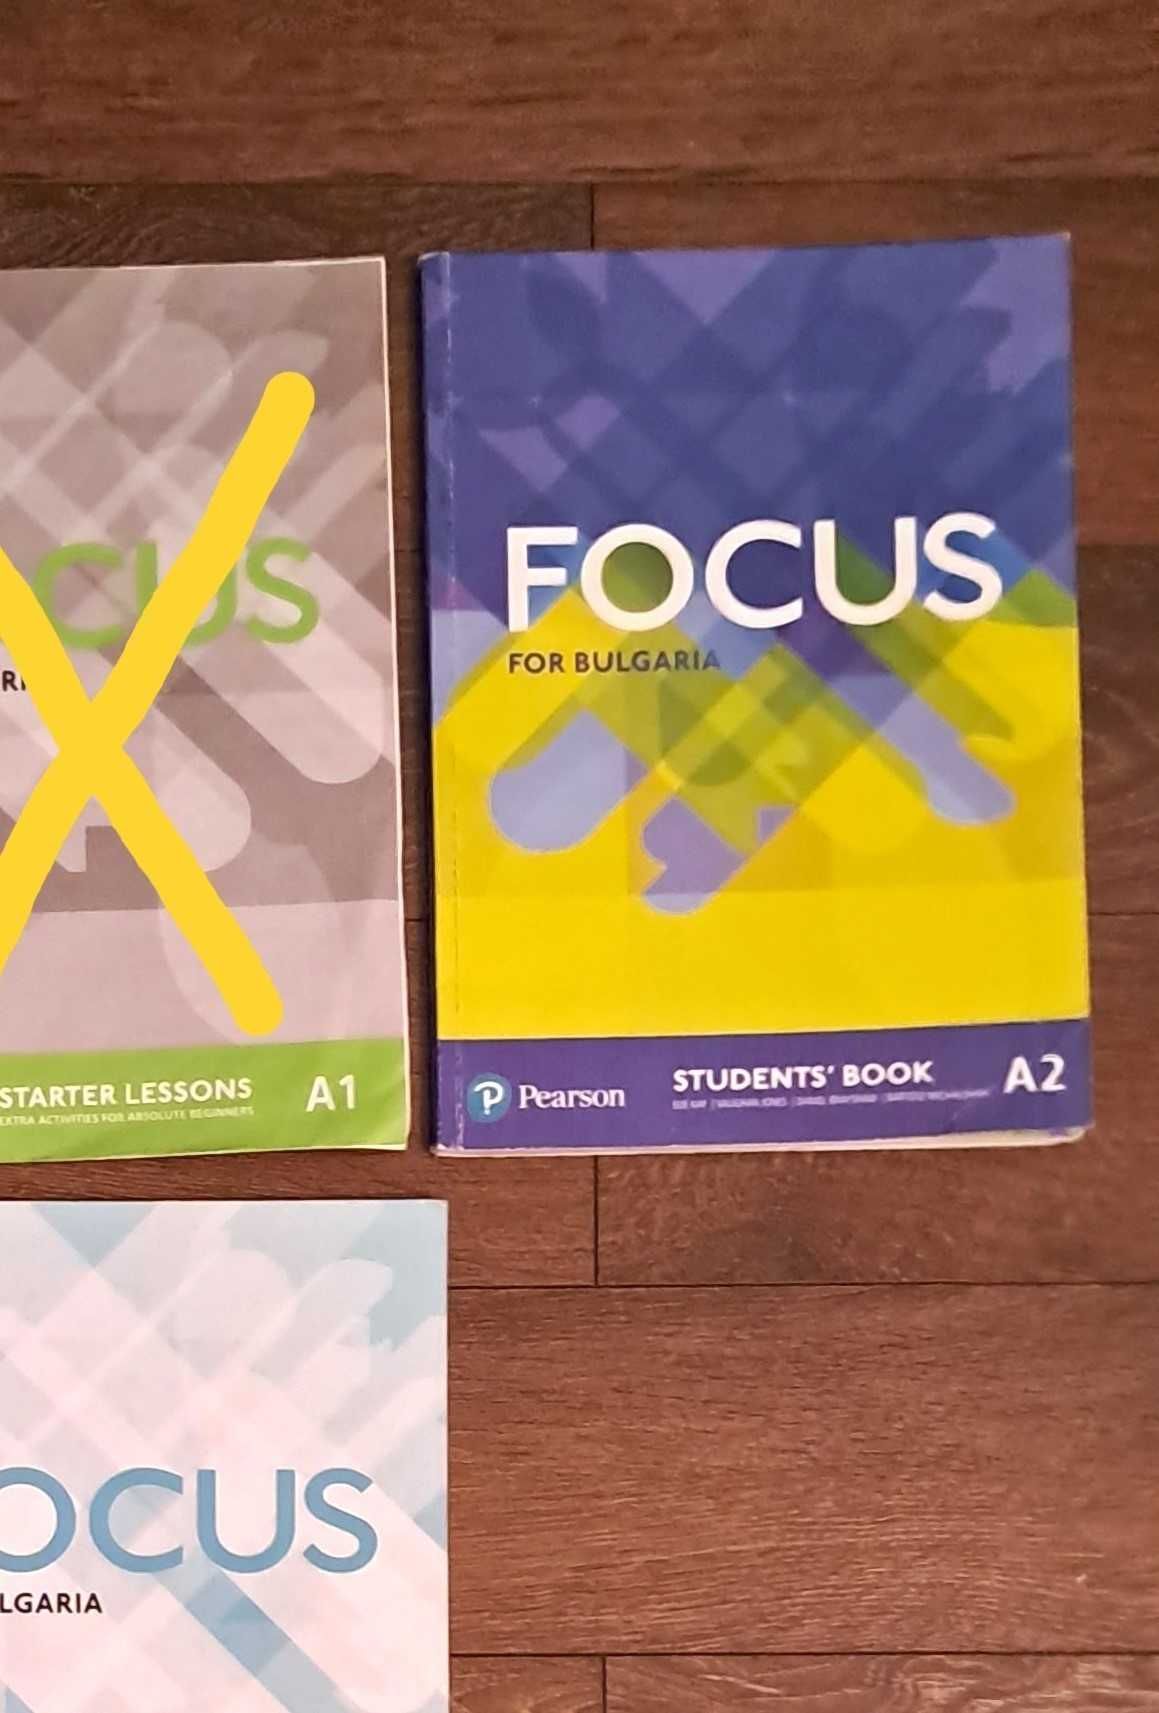 Учебниk по Английски Focus for Bulgaria students' book A2